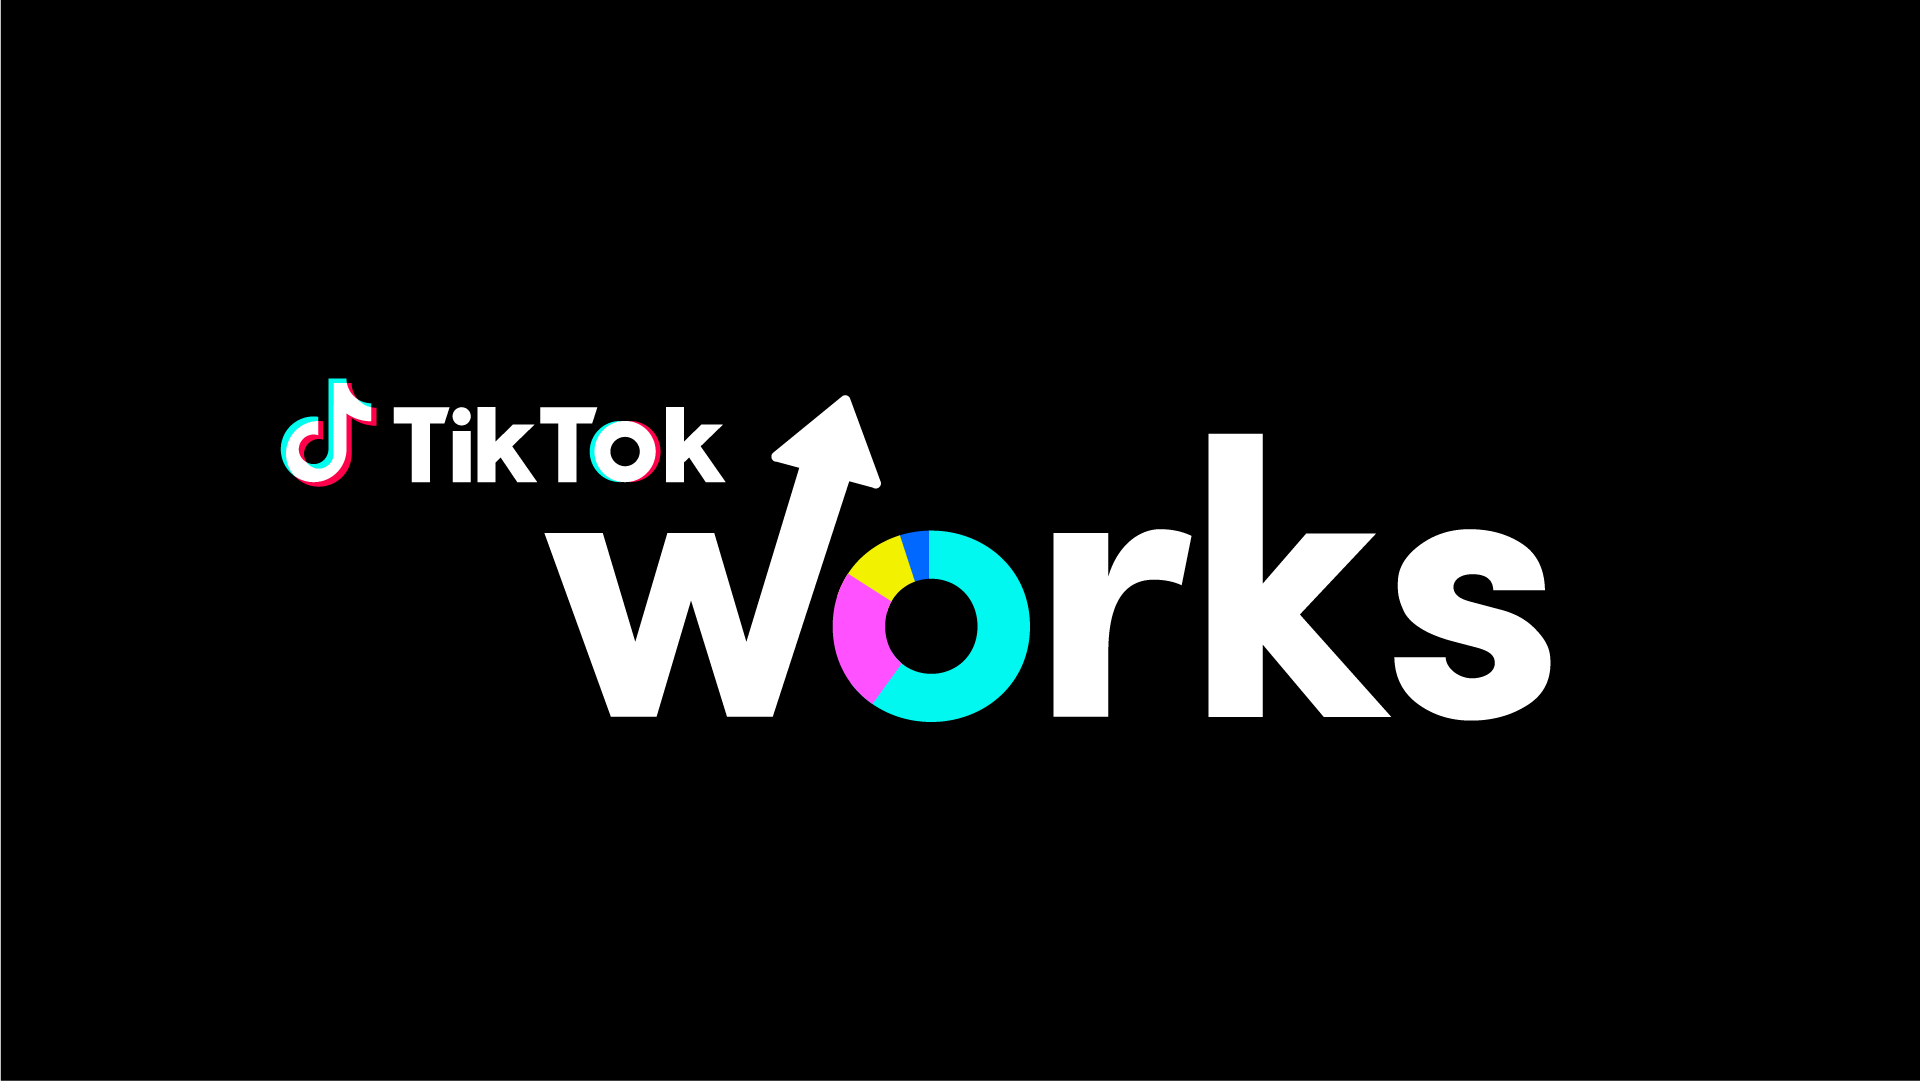 TikTok Works, Delivering Measurable Business Impact